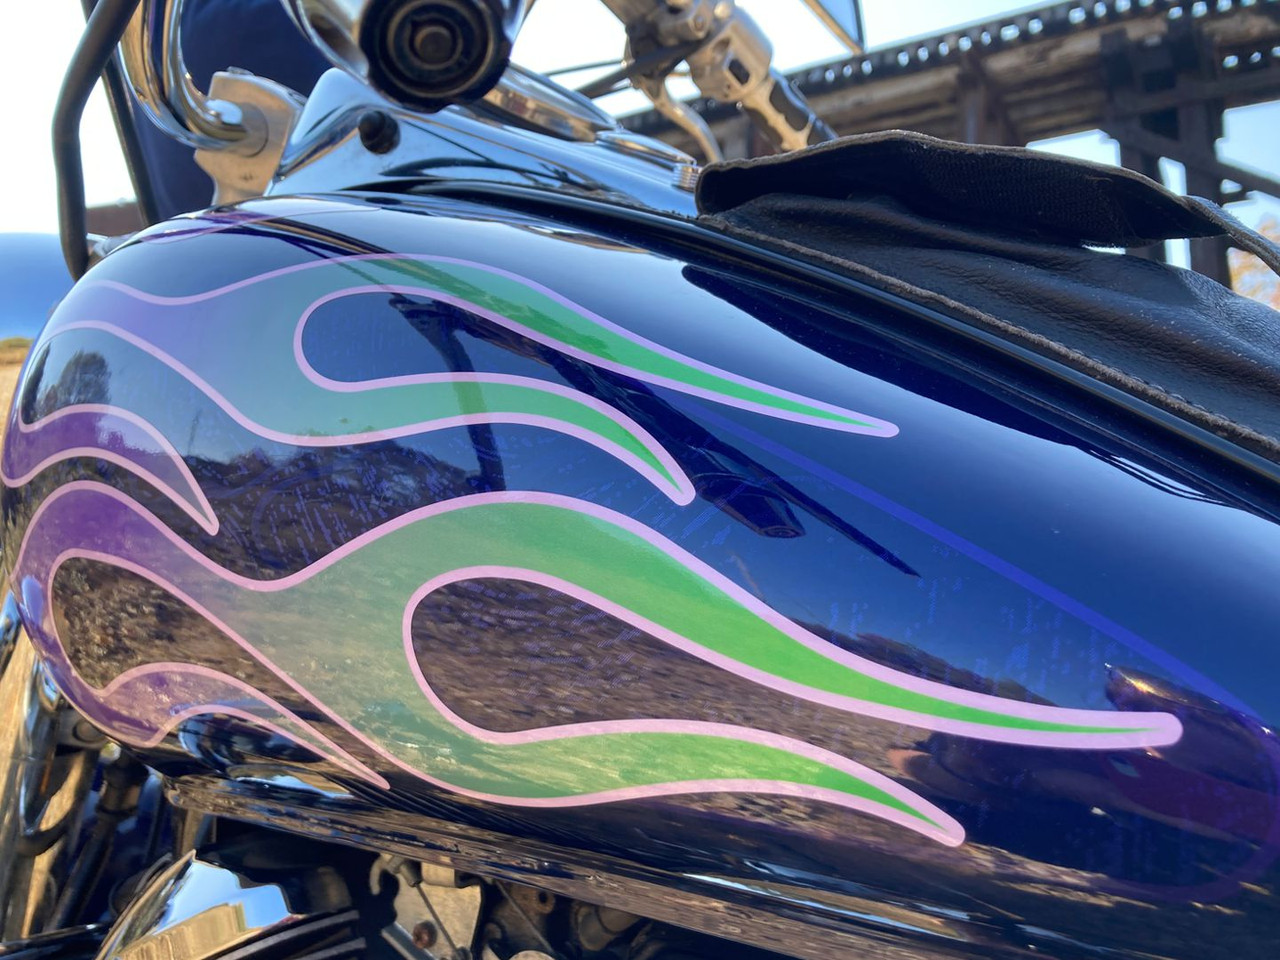 Old School - Big No. 6 - Motorcycle Flame decals - Green & Purple - 6pc set